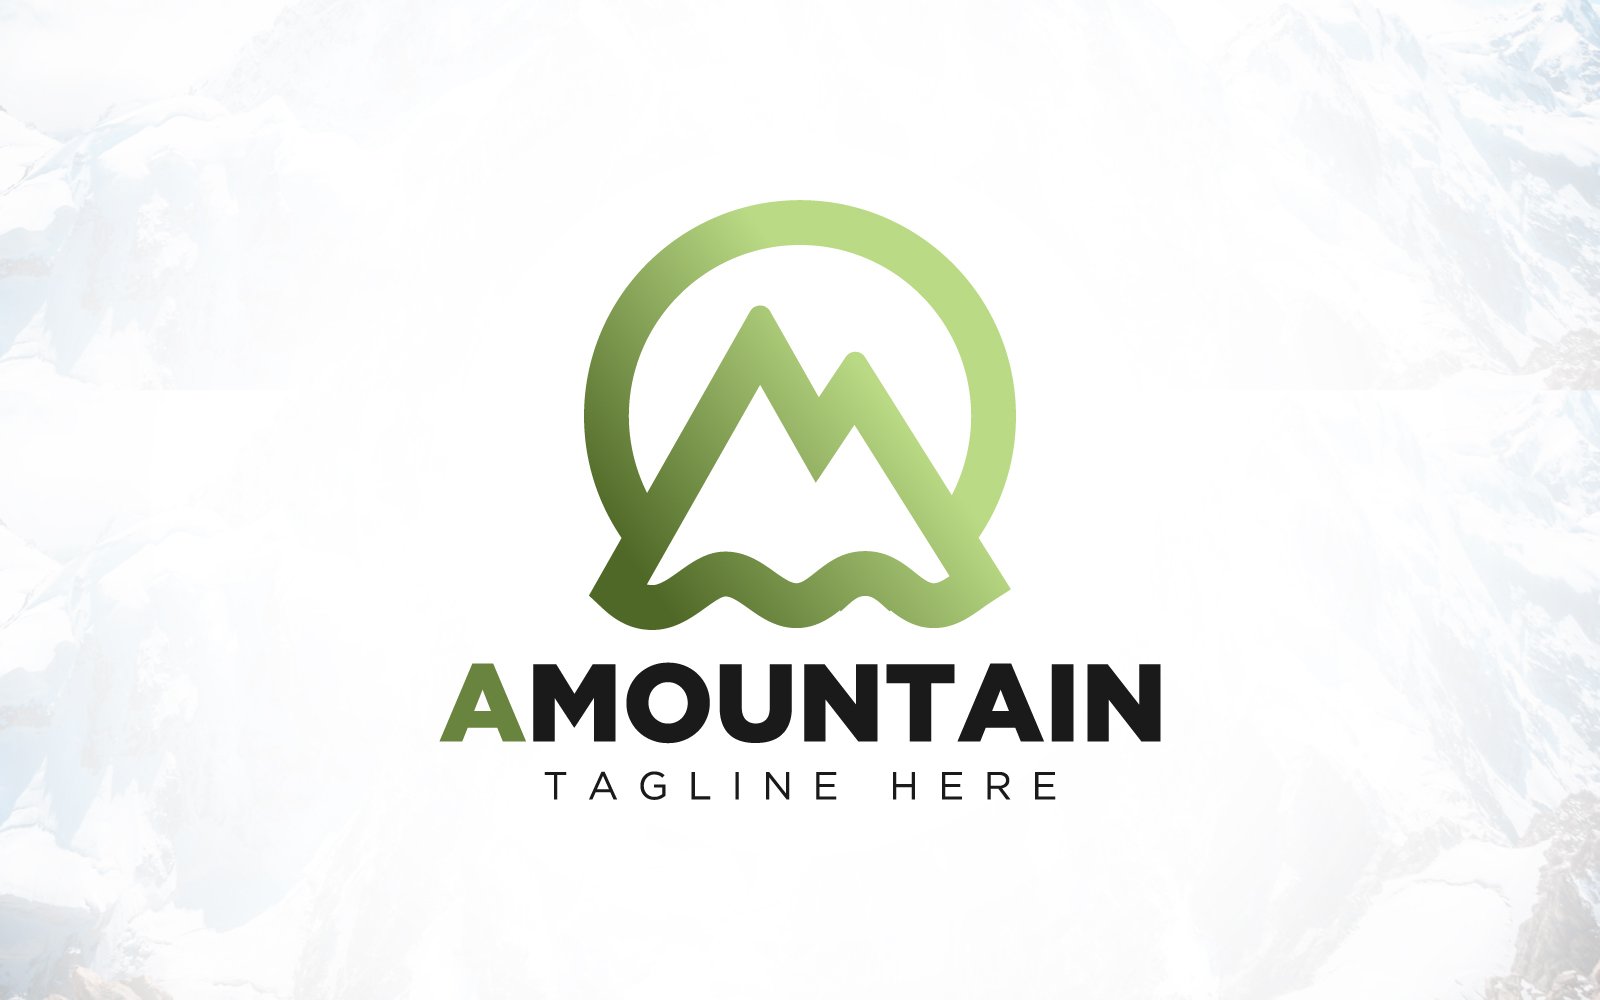 Template #402575 Mountain Adventure Webdesign Template - Logo template Preview